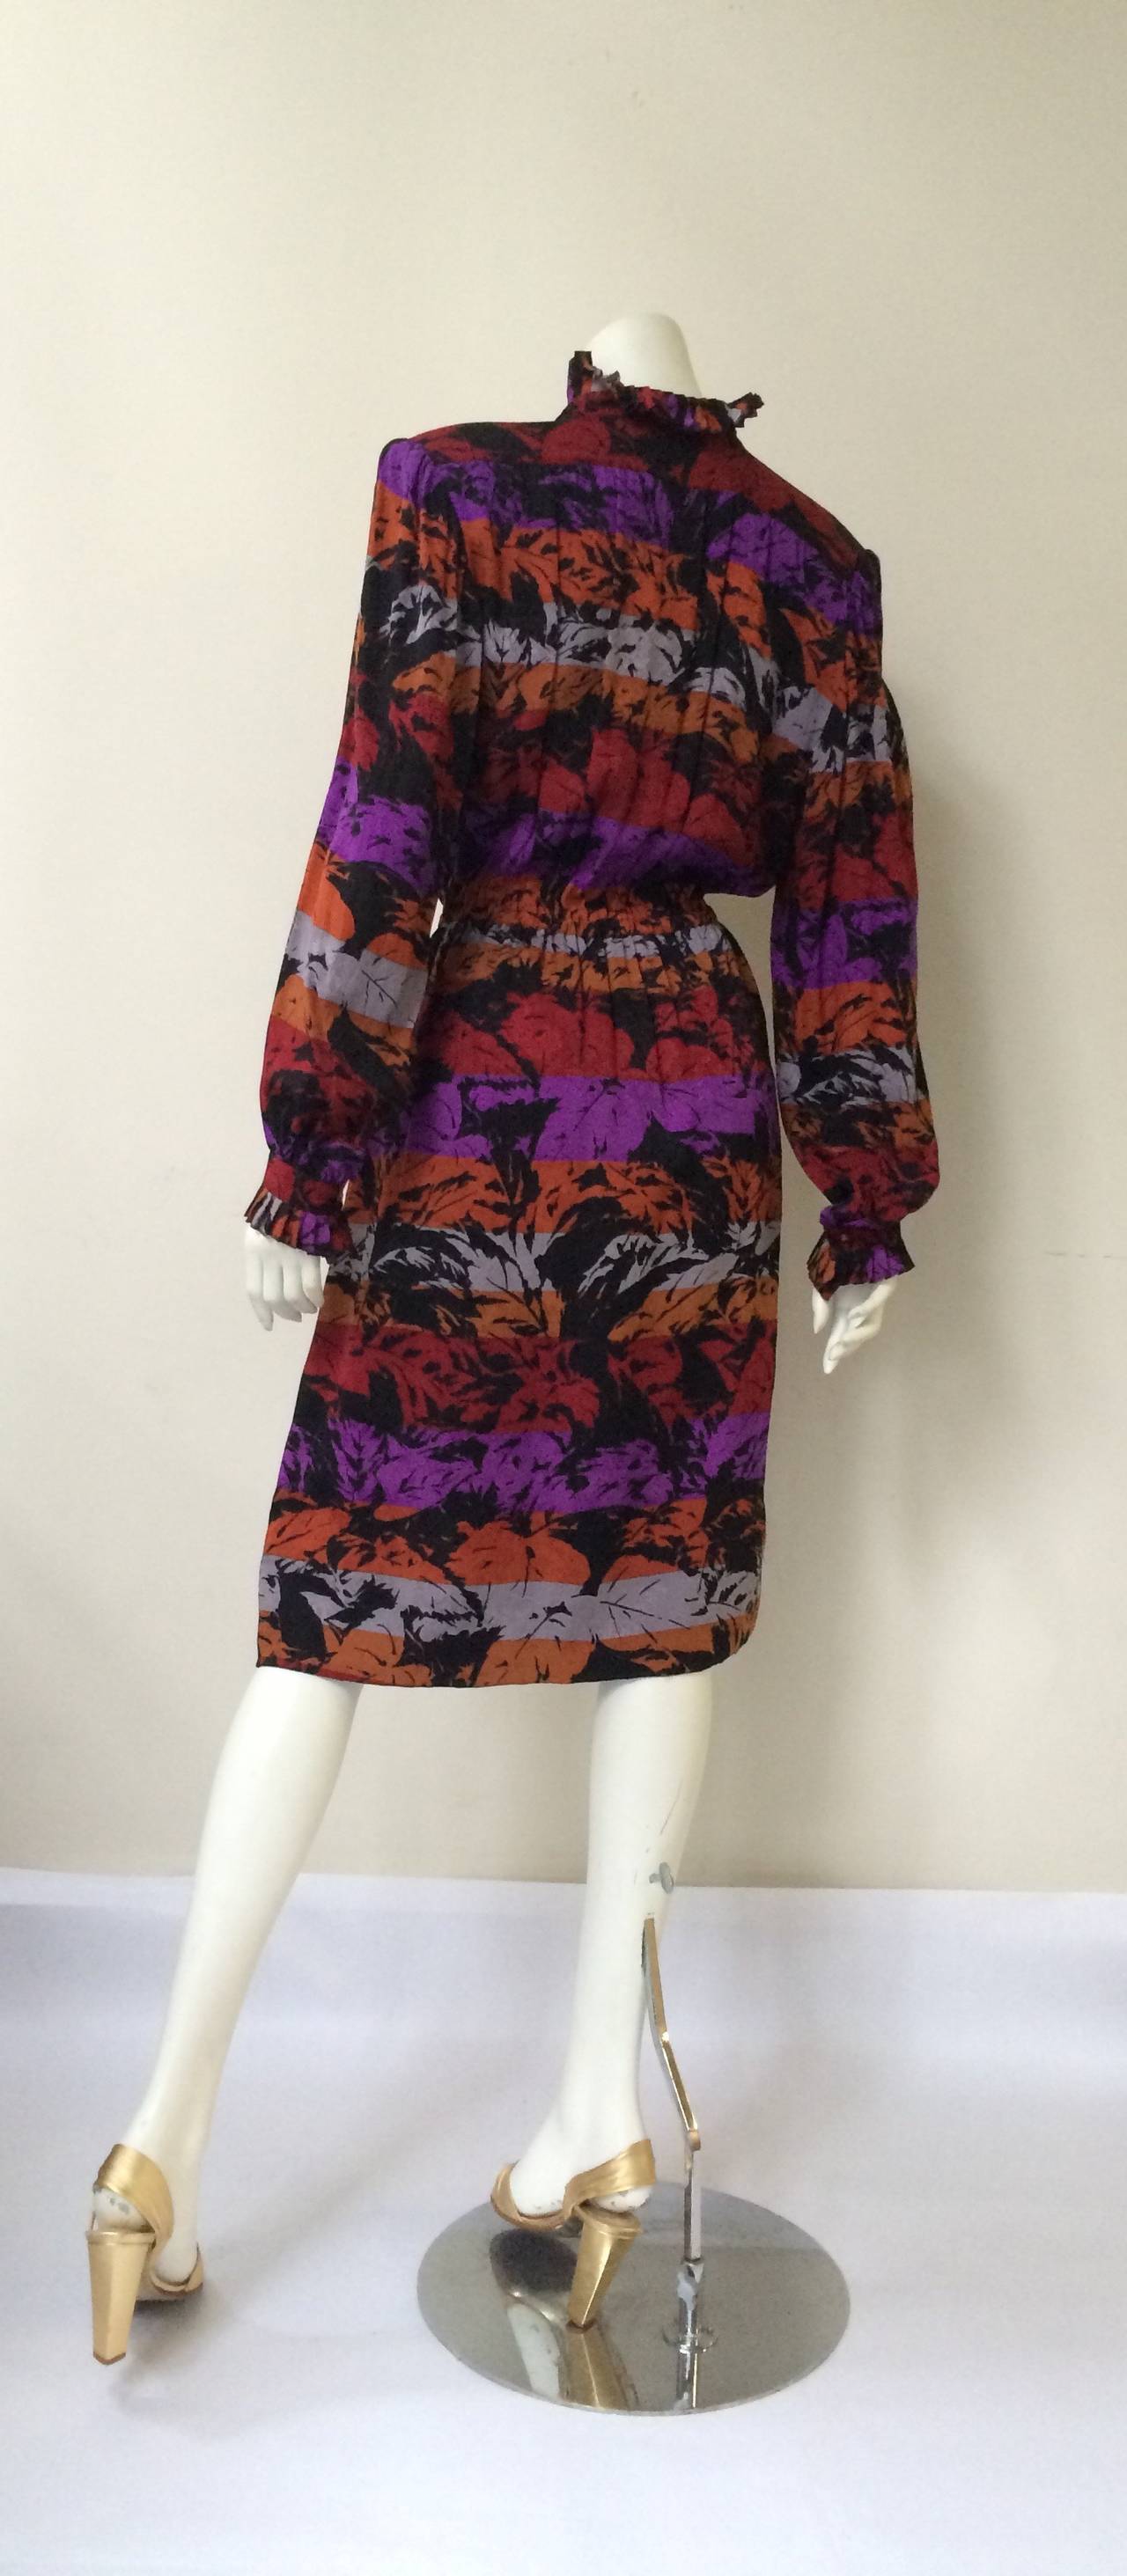 Nina Ricci Boutique Paris 70s silk dress size 4/6. 2